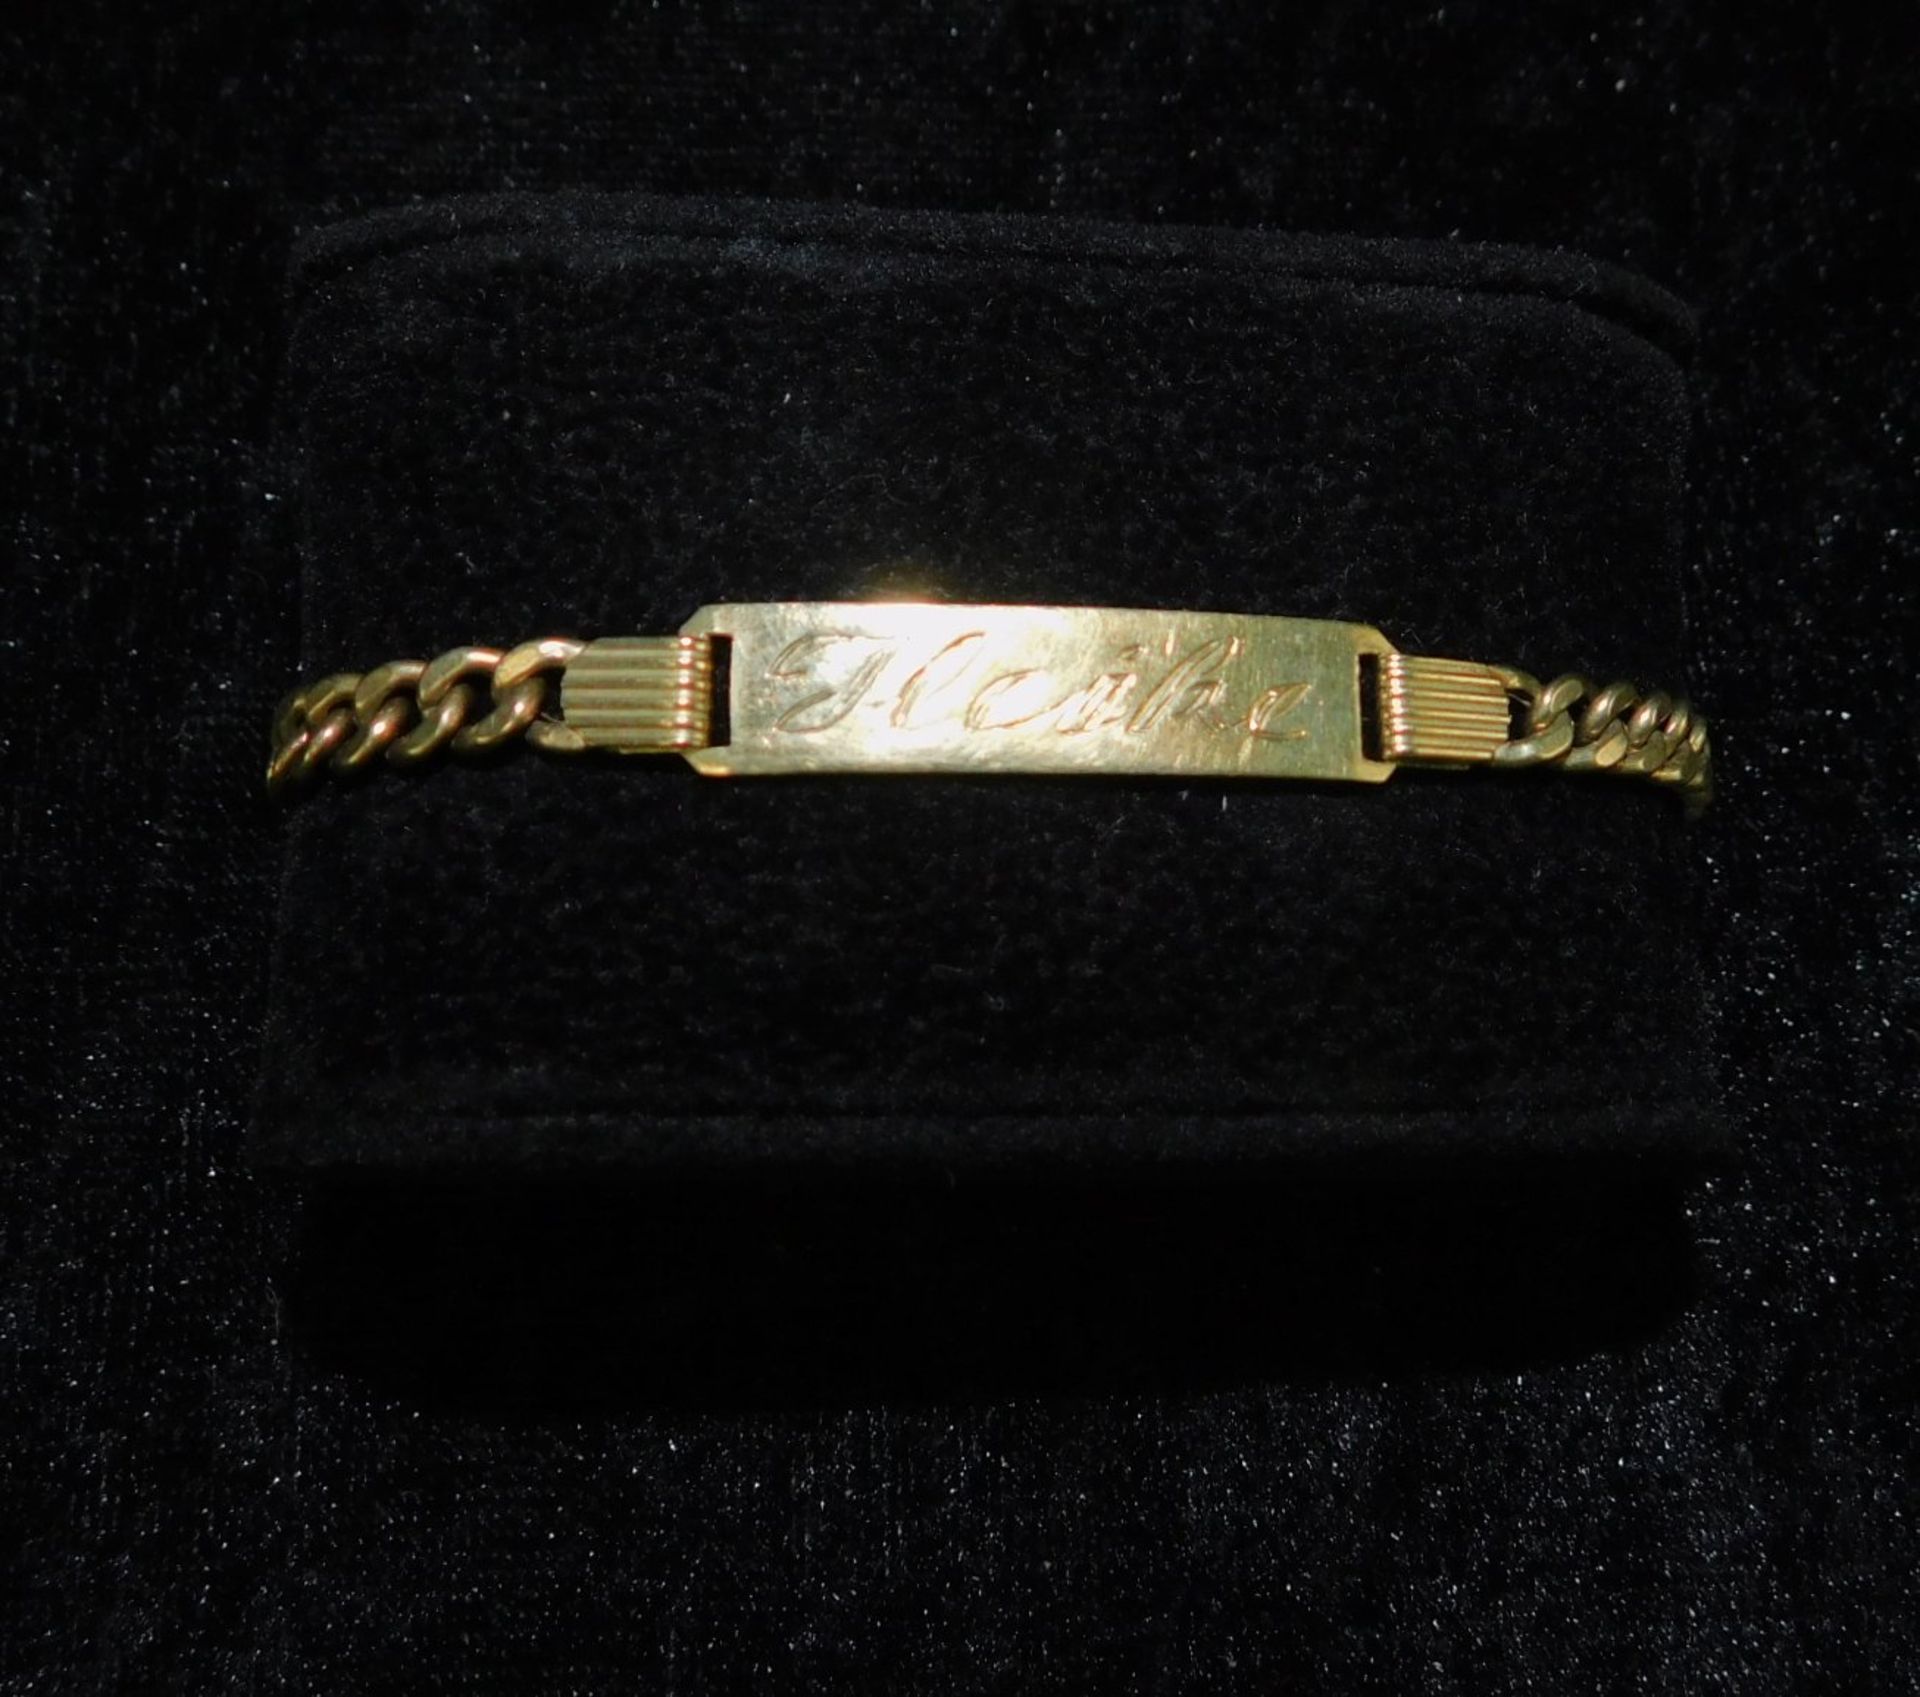 Namensarmband "Heike", Gold 585, 4,9 g, Länge 18 cm